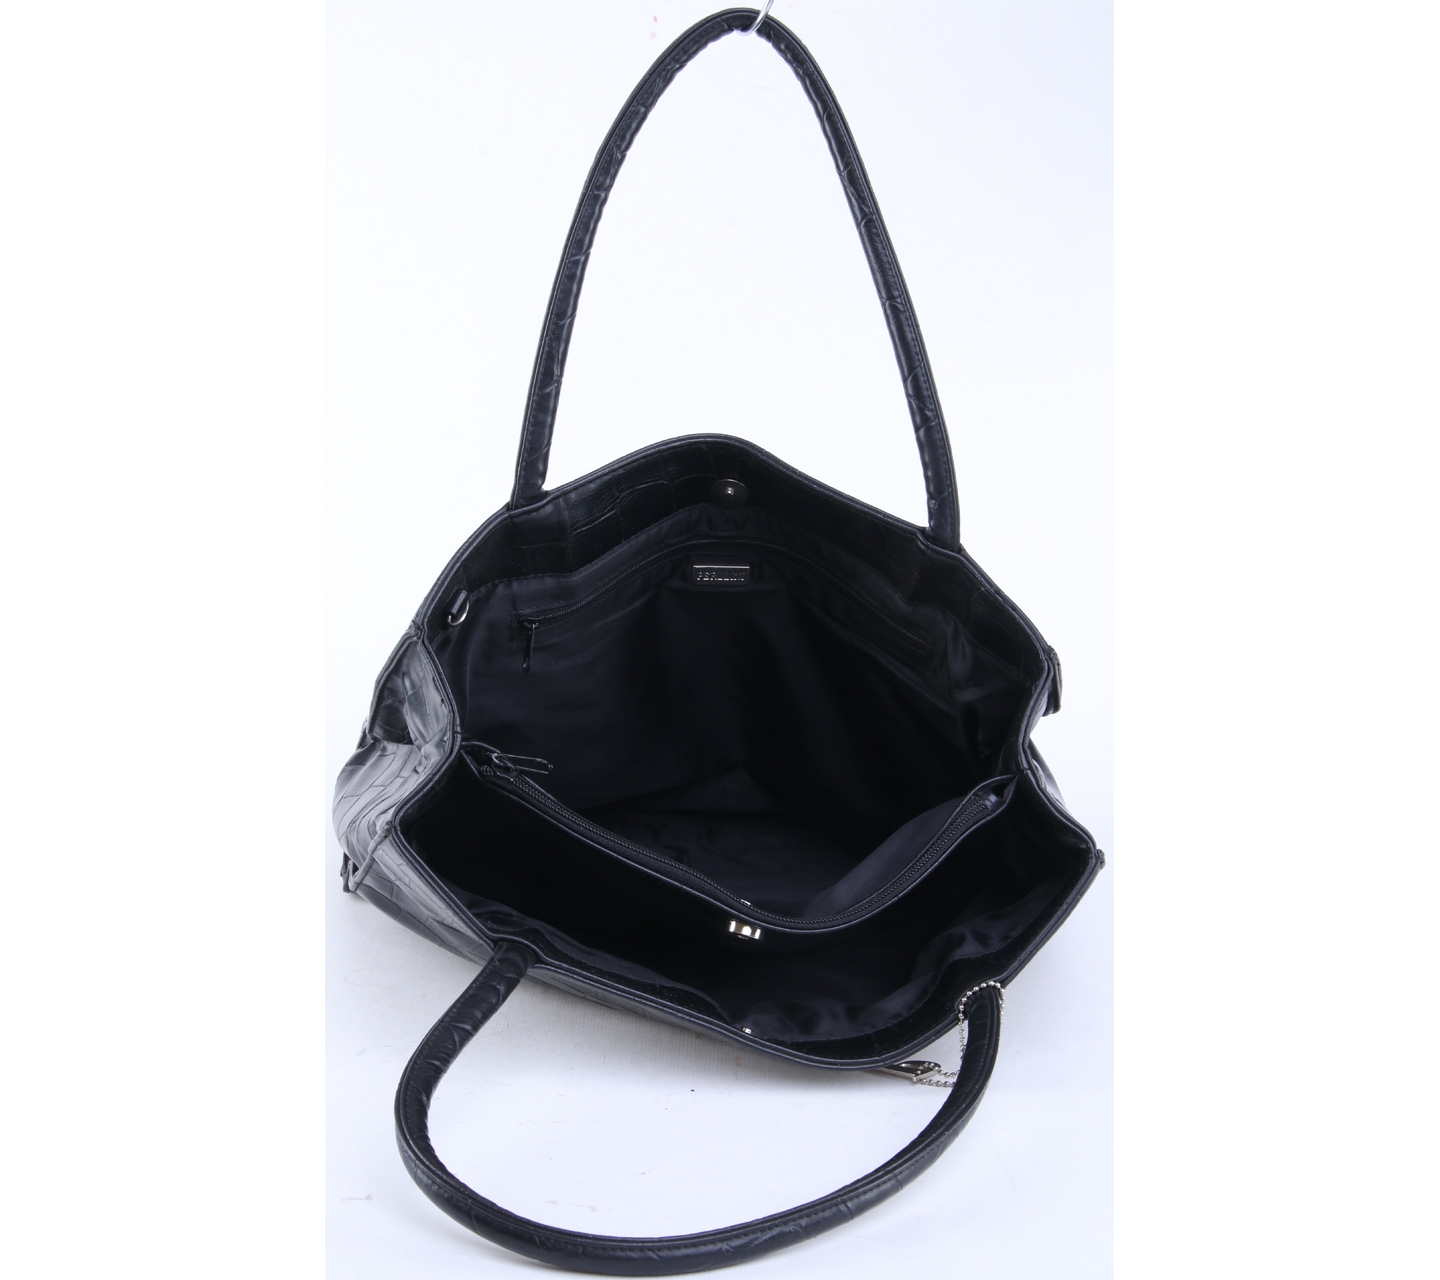 Perllini Black Shoulder Bag